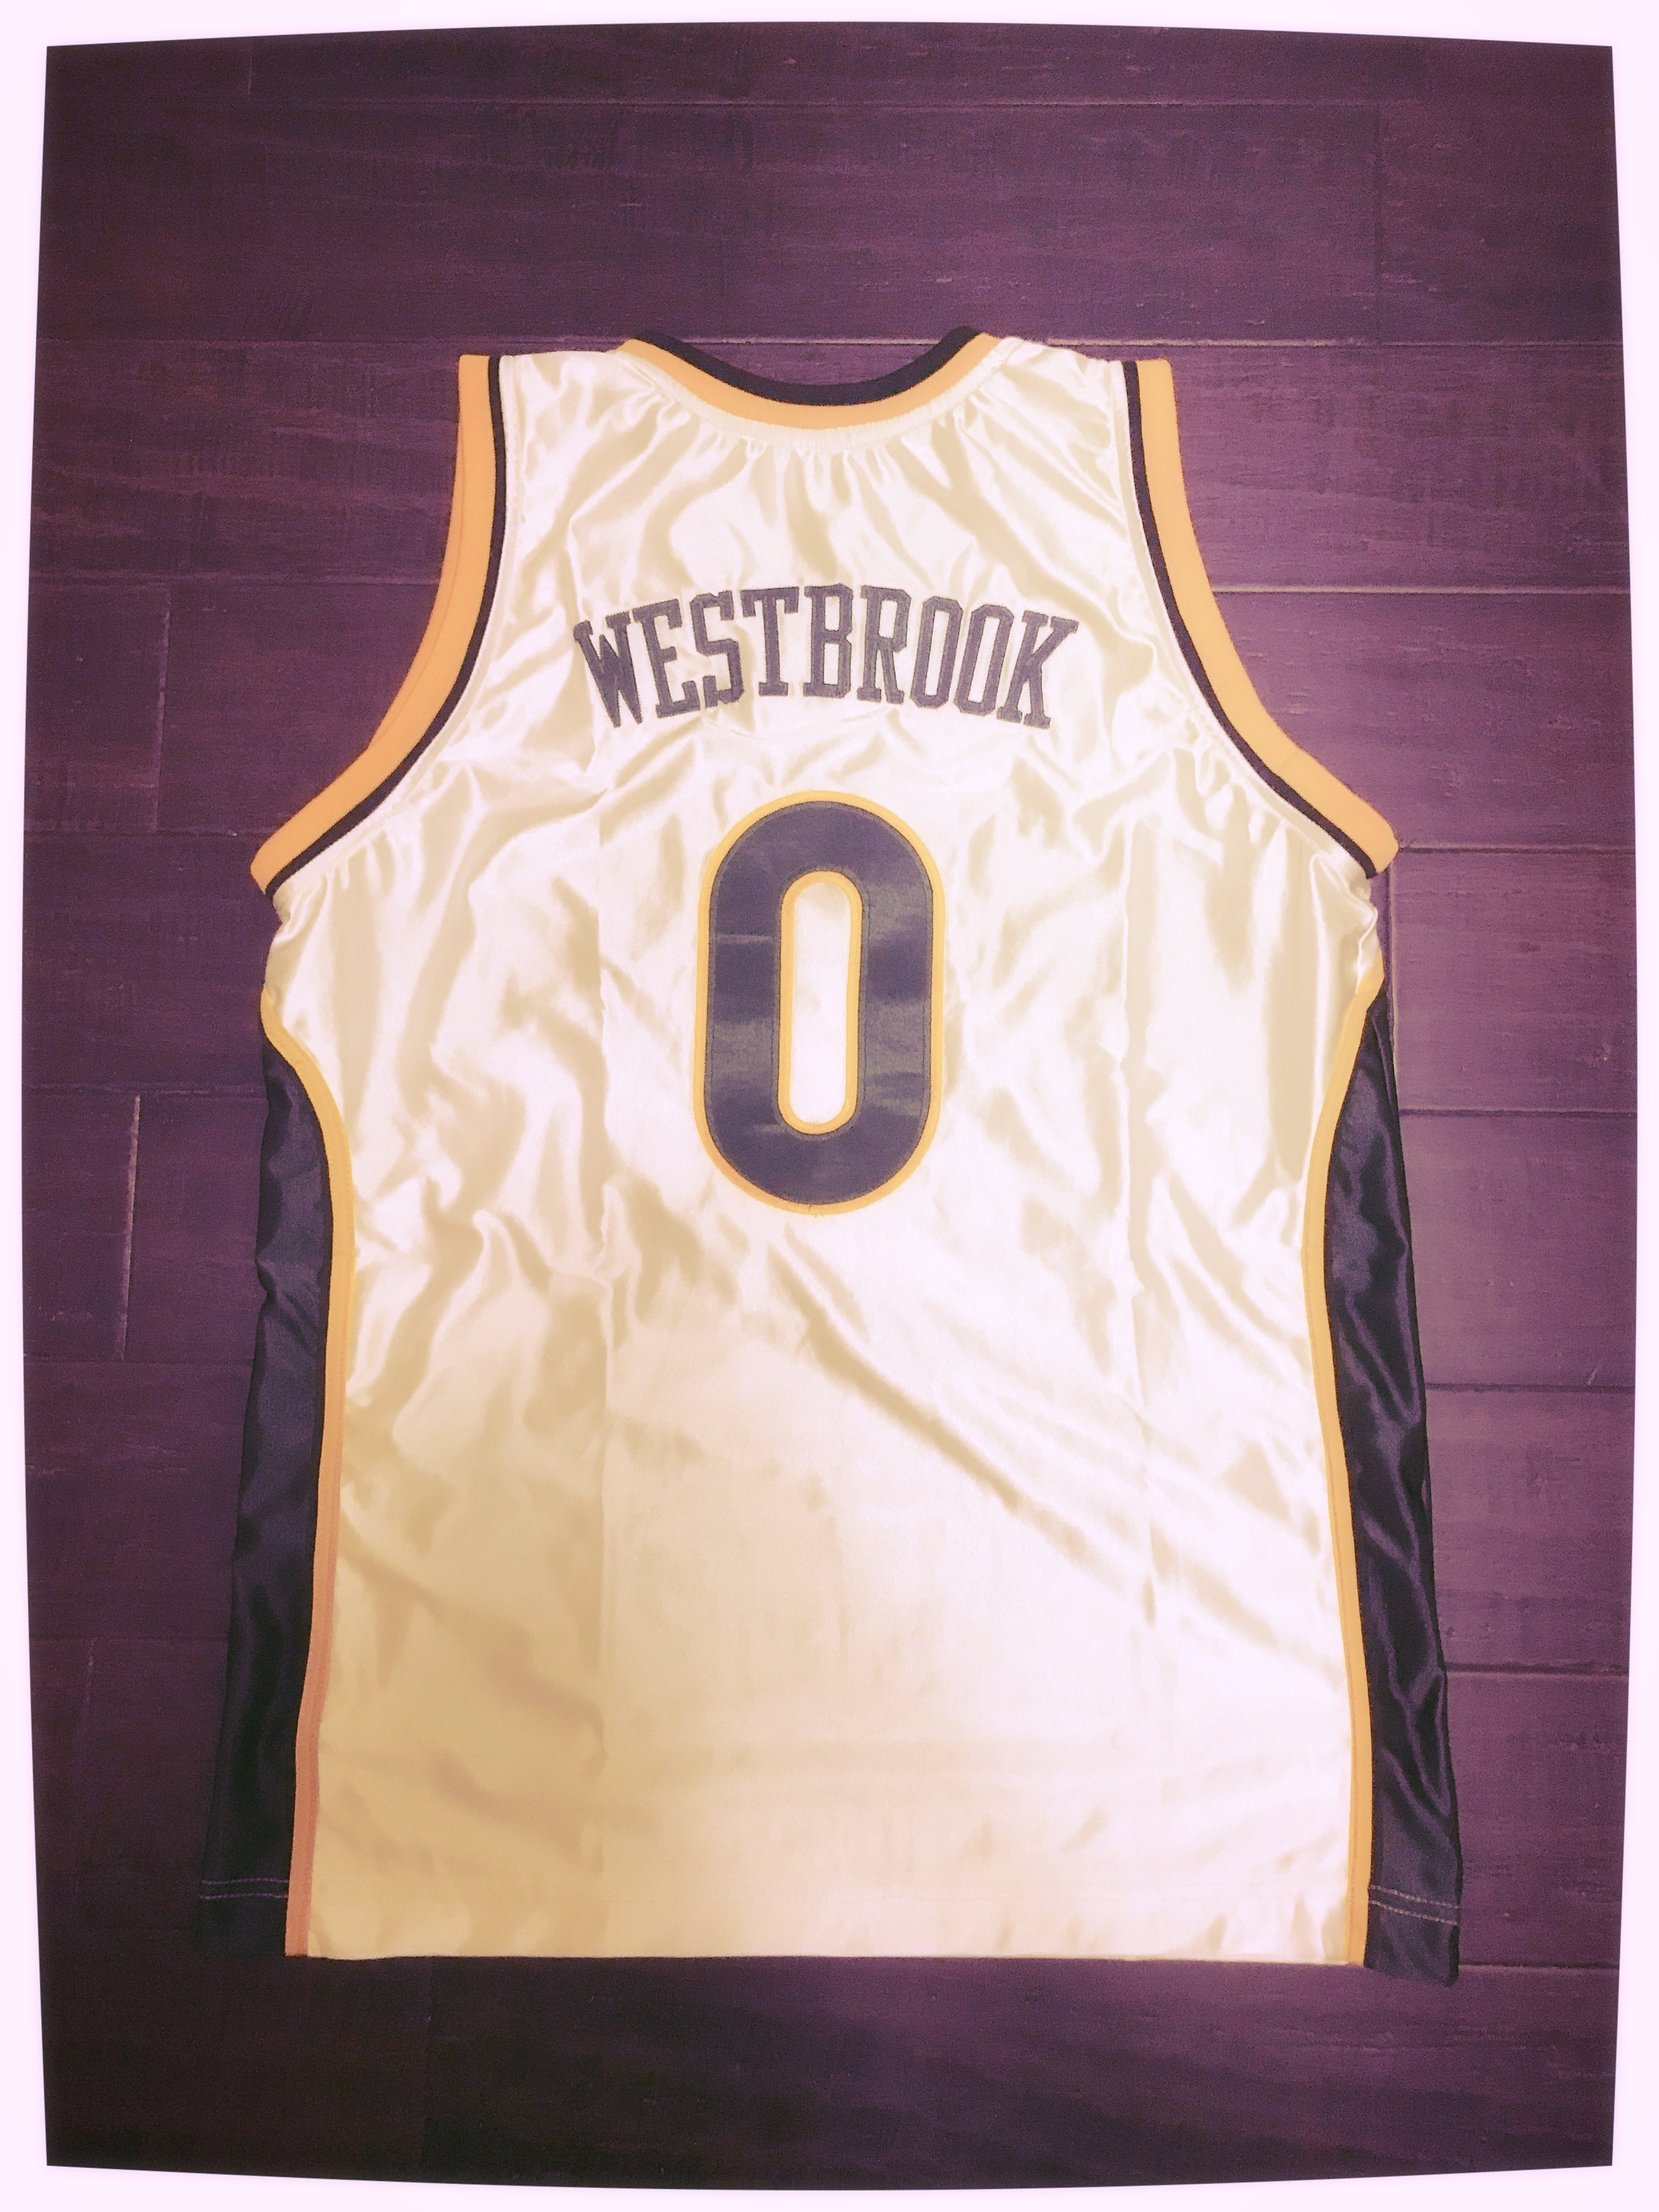 westbrook supersonics jersey